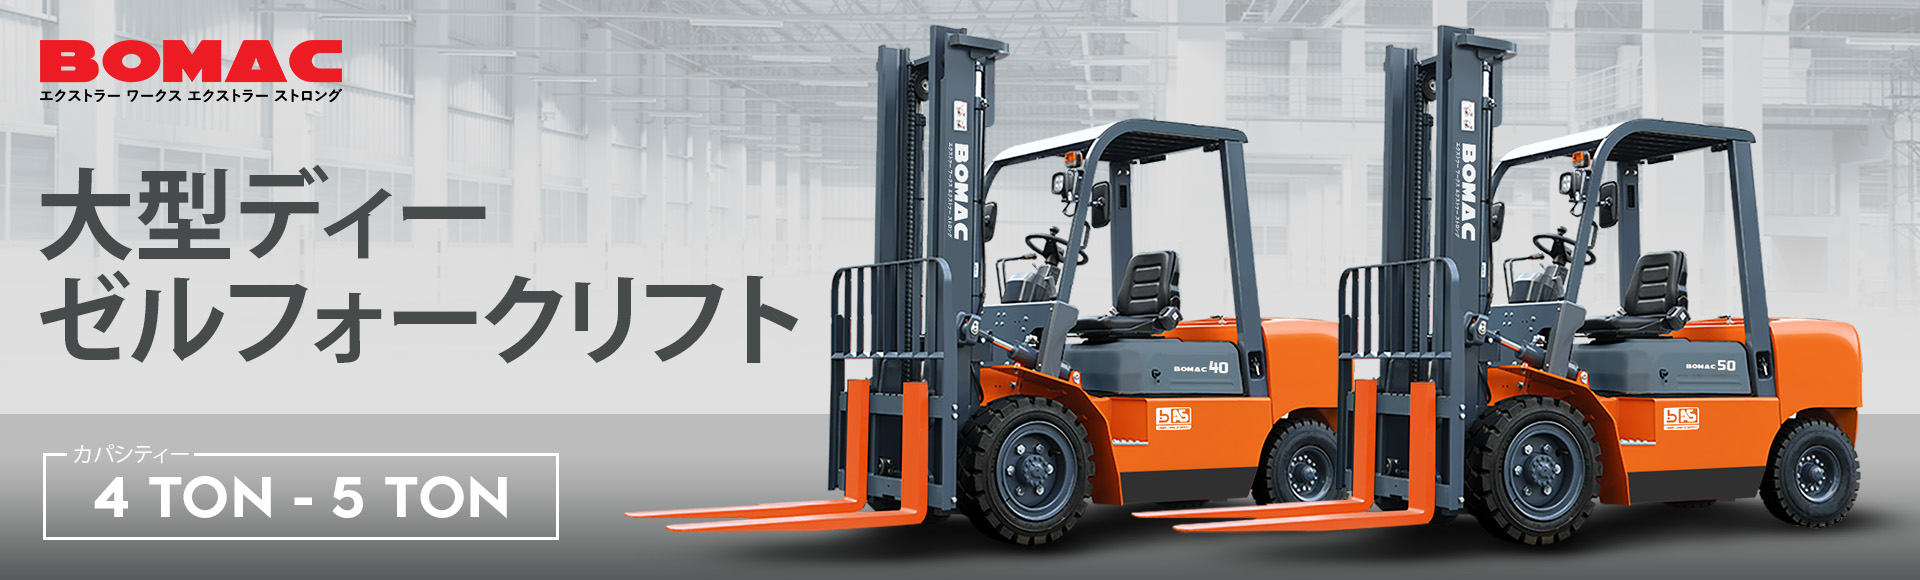 Banner Bomac Forklift Japan 4 TON - 5 TON Japan Ver